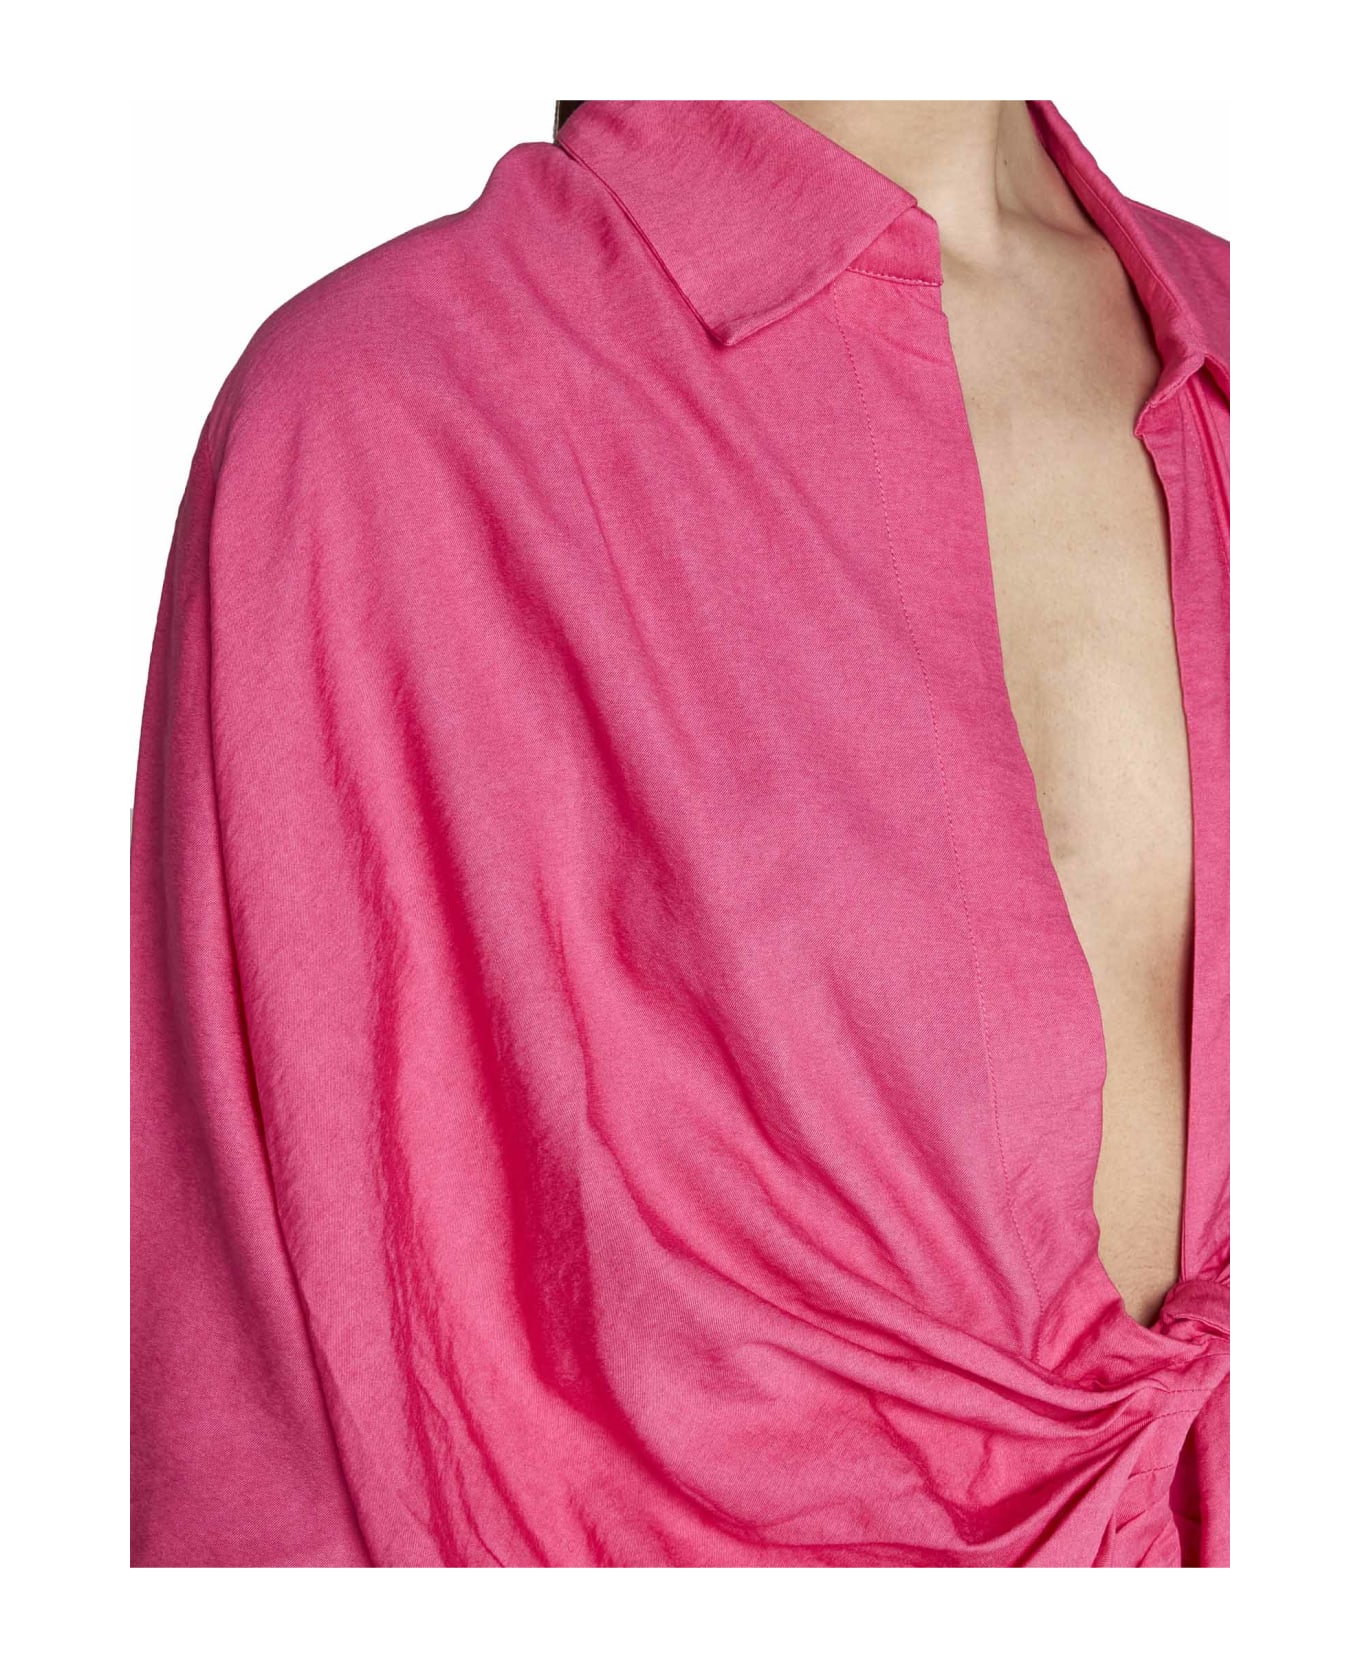 Jacquemus Bahia Dress - Pink ワンピース＆ドレス